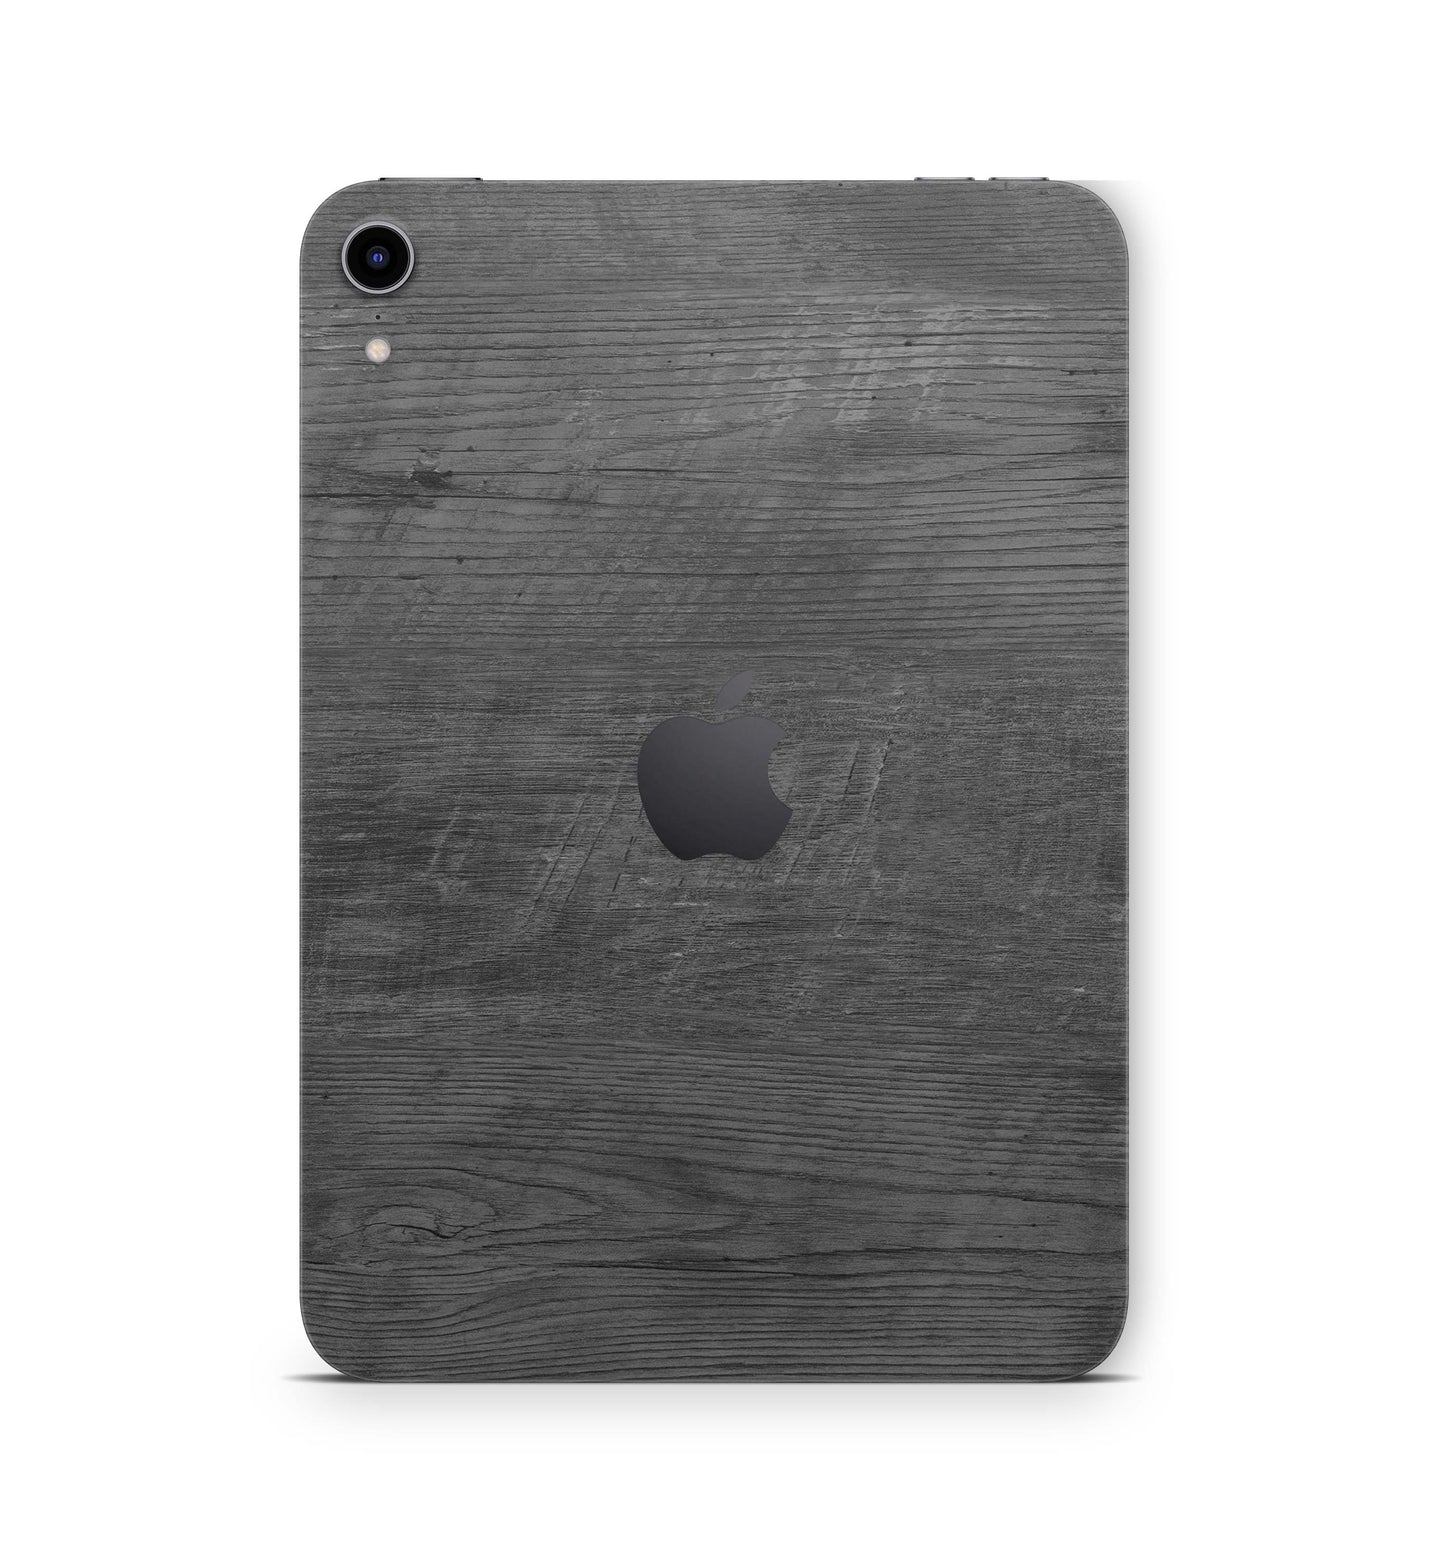 iPad Mini Skin Design Cover Folie Vinyl Skins & Wraps für alle iPad Mini Modelle Aufkleber Skins4u Black-Woodgrain  